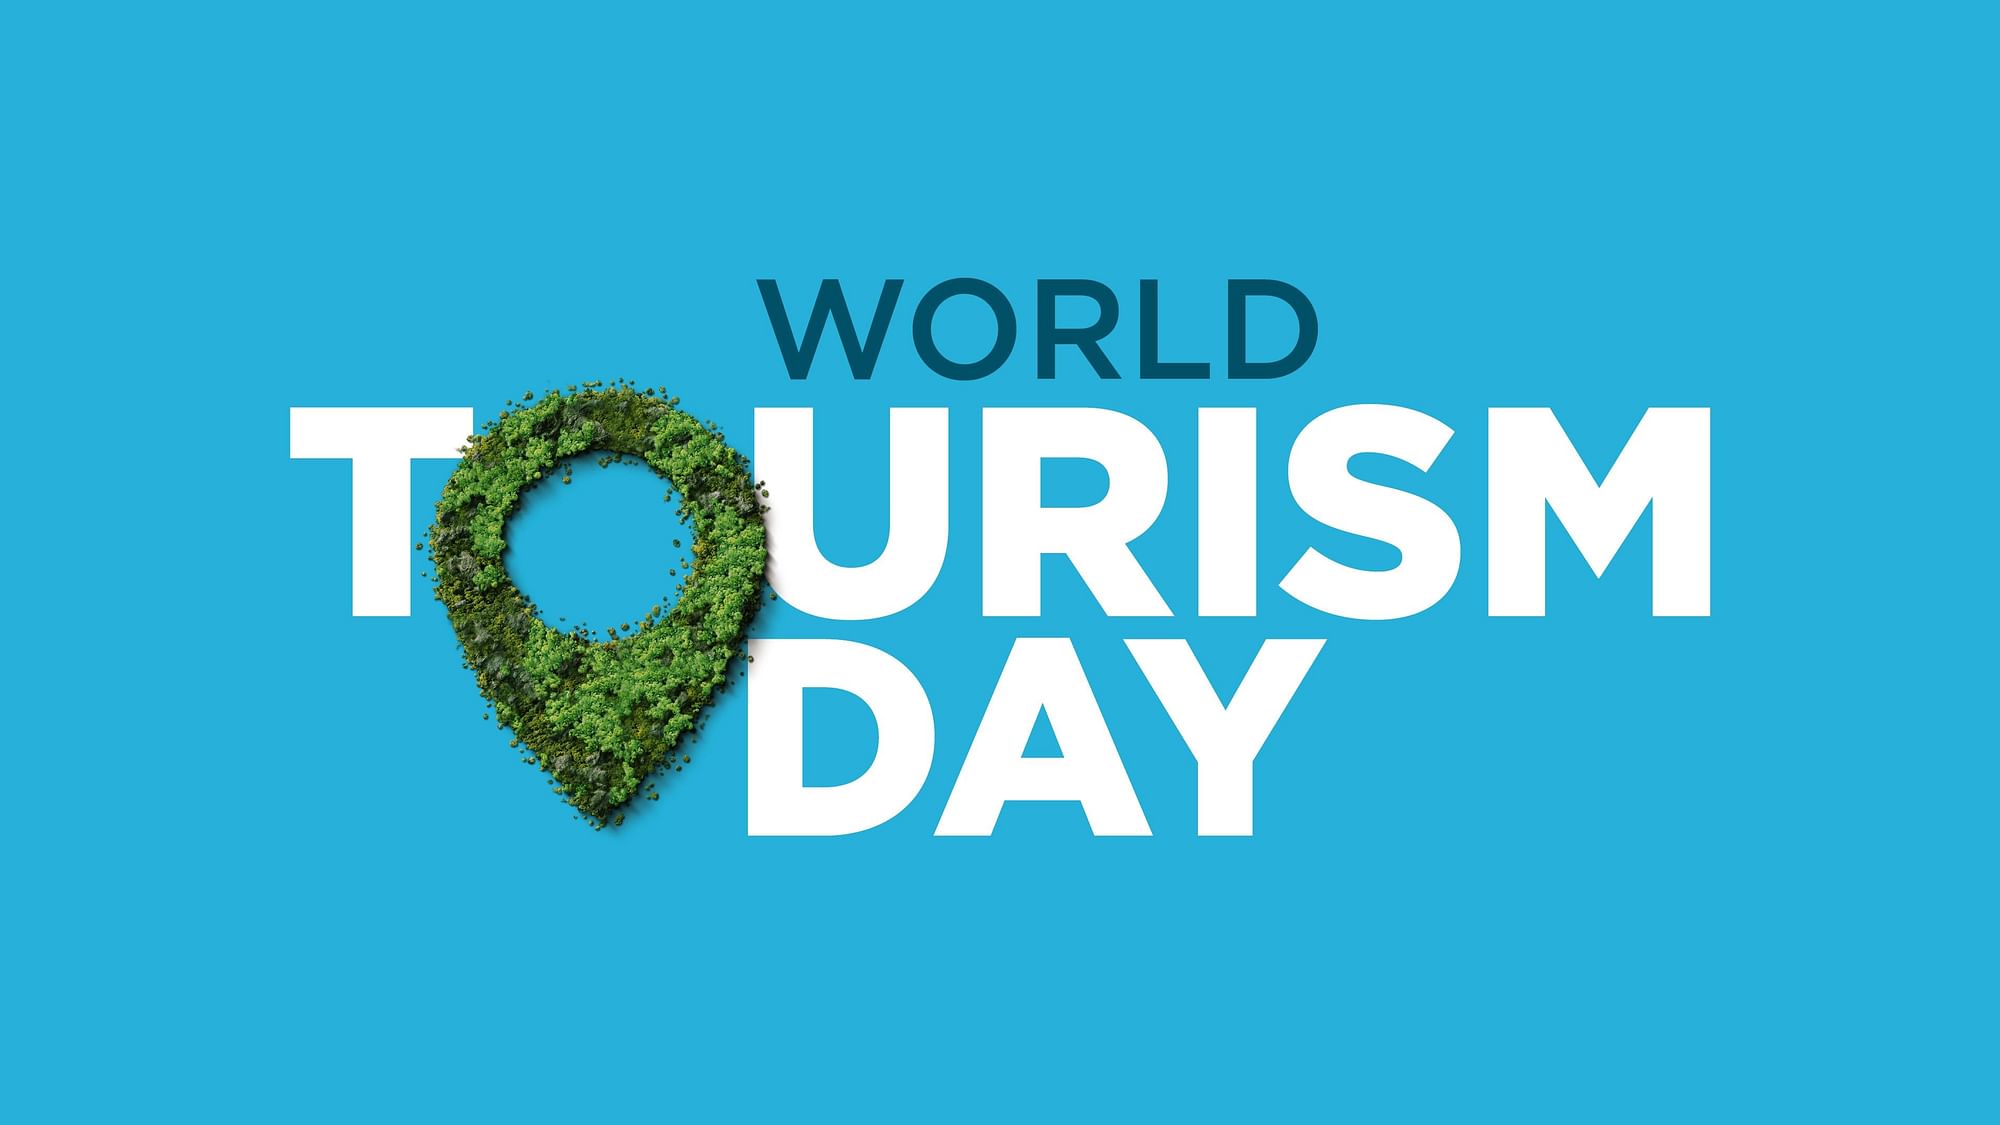 world tourism day